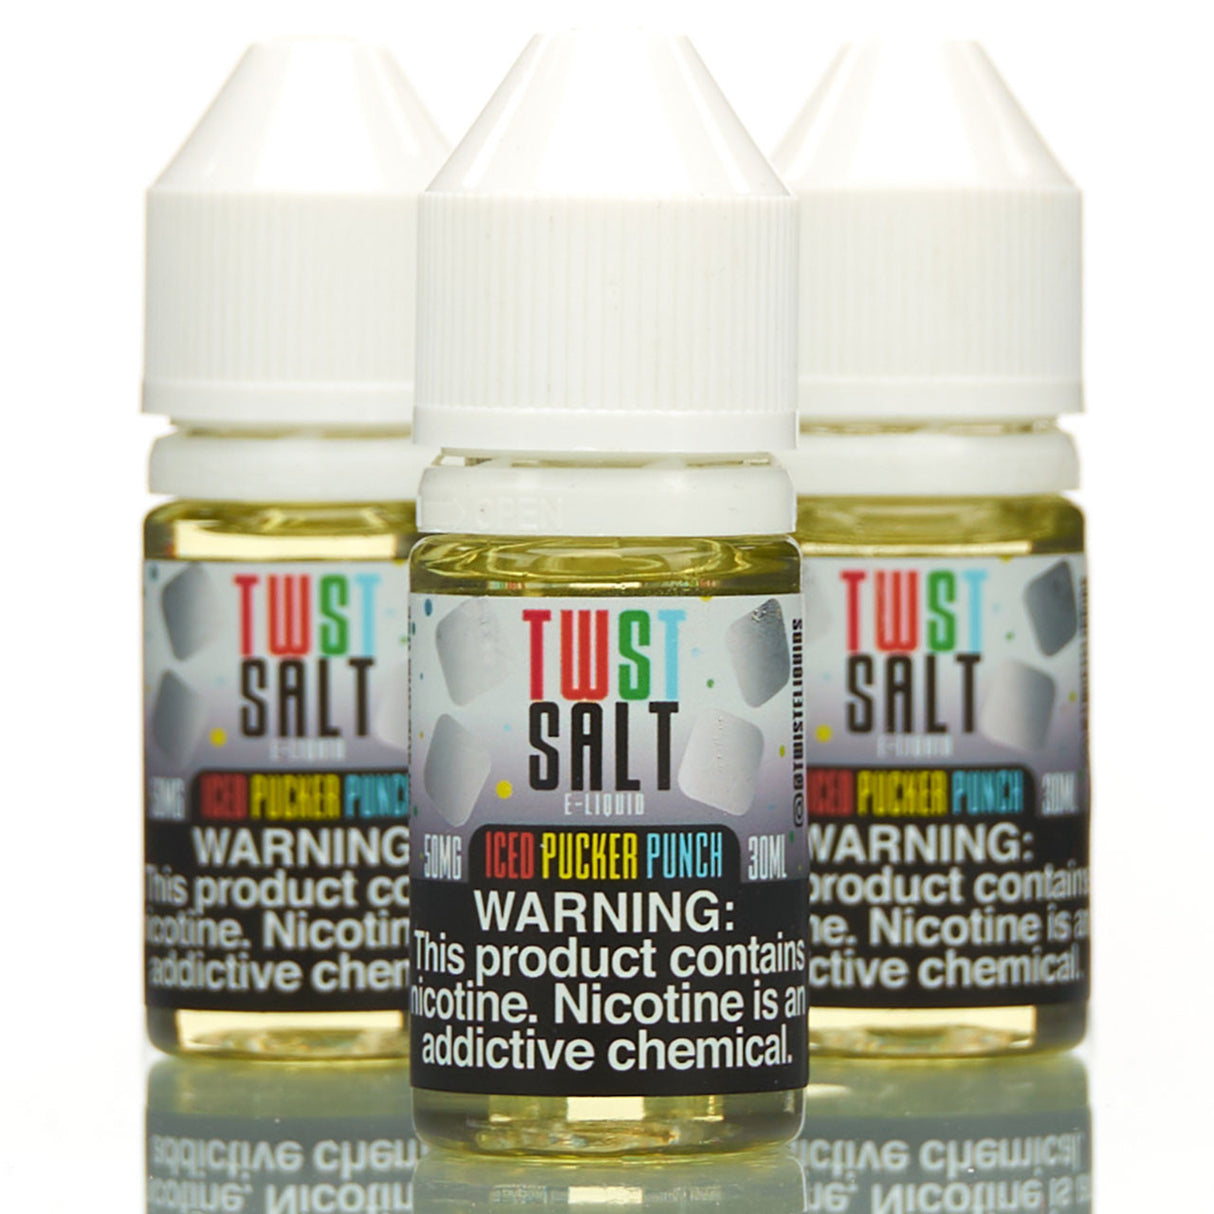 TWST e-Liquids Flavored Salt Nicotine 50mg Iced Pucker Punch